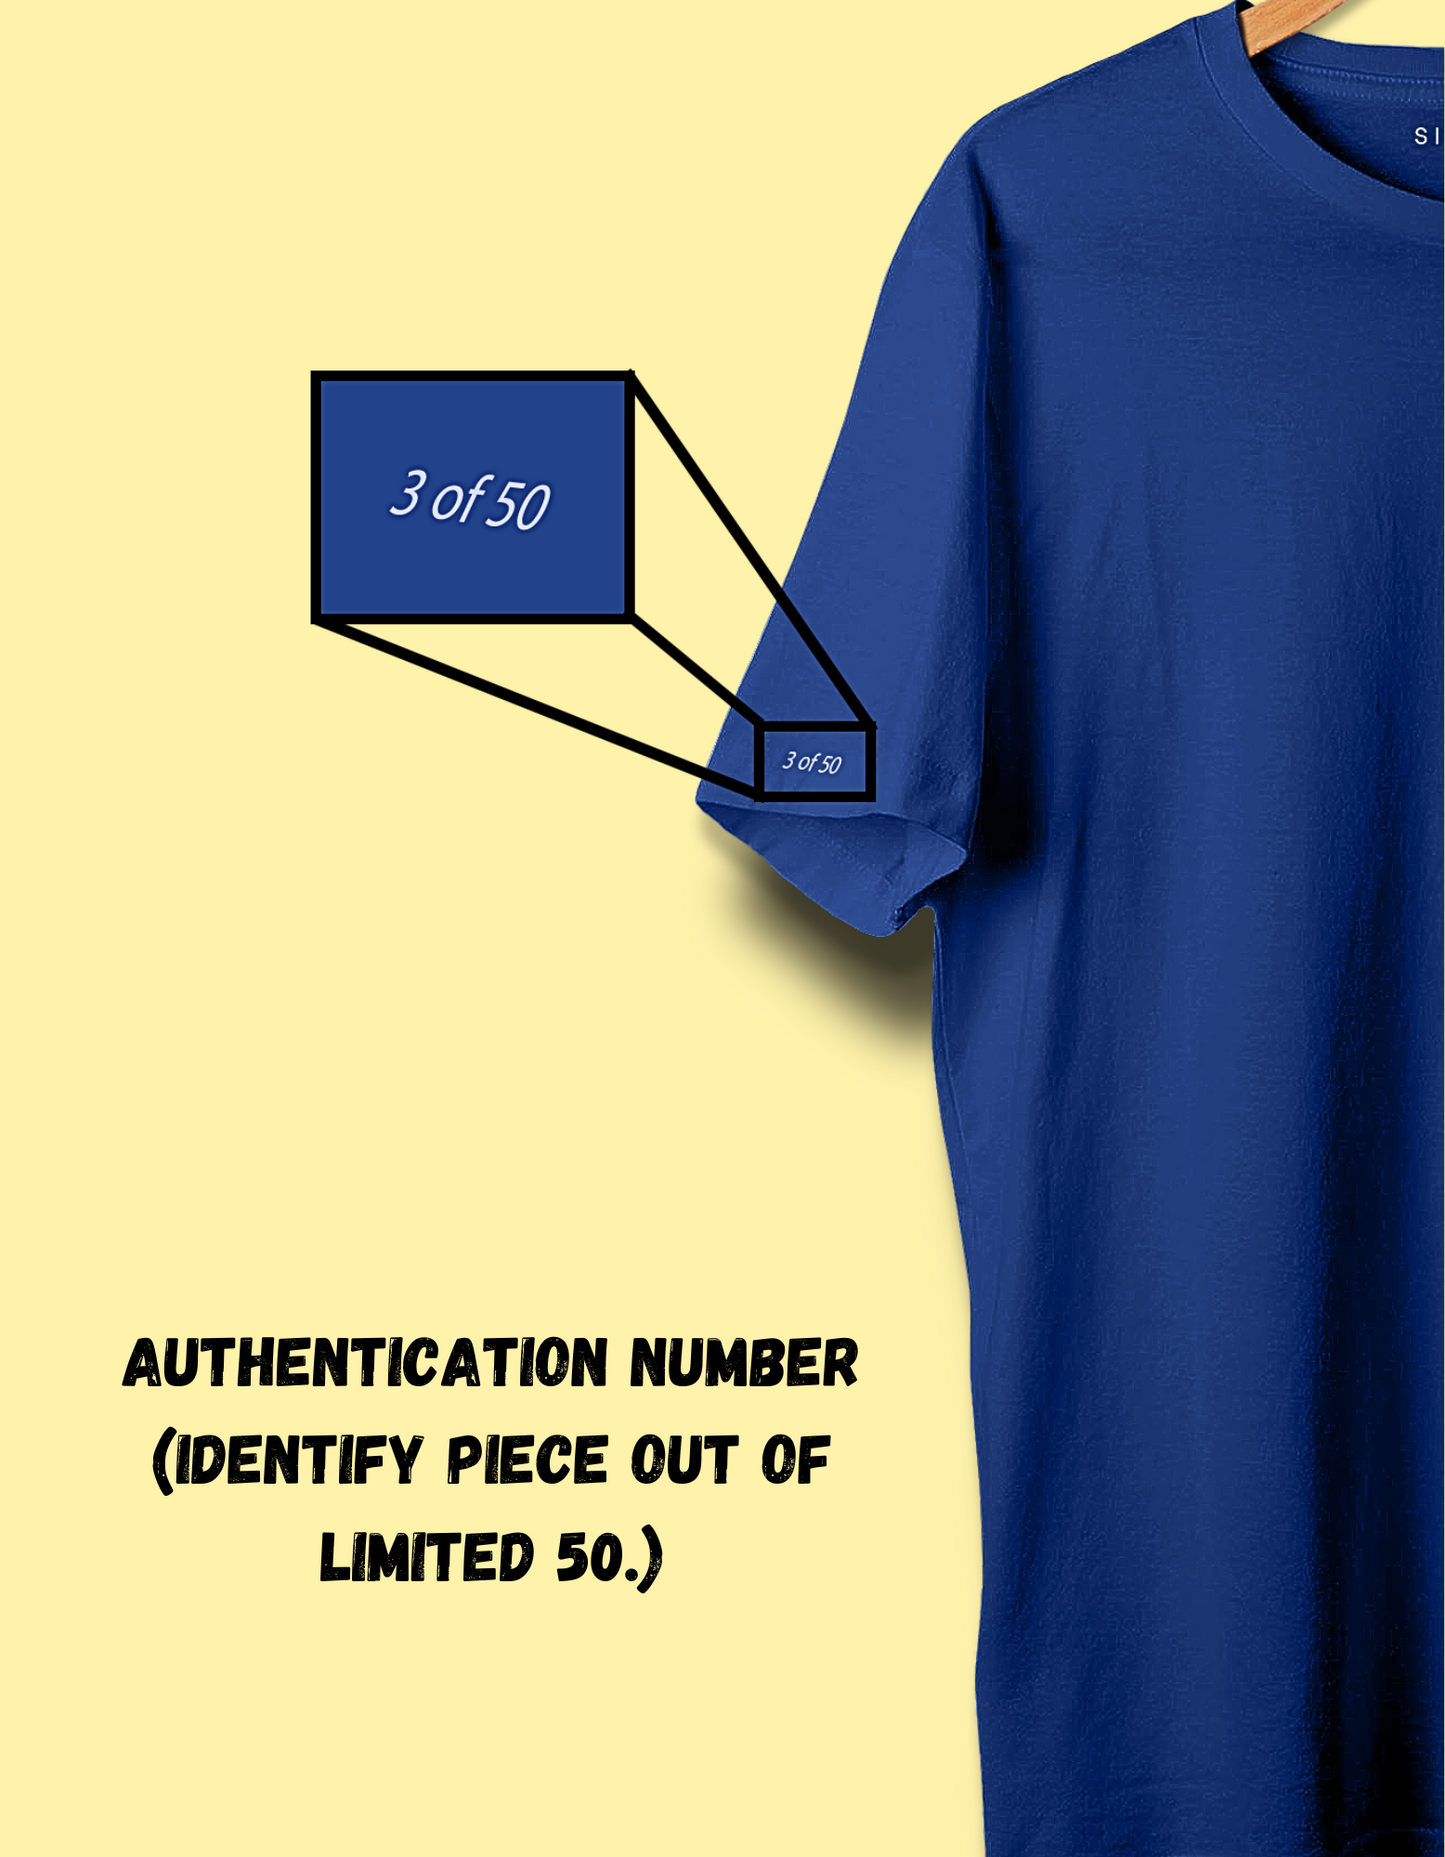 Life Lemon | 220+GSM Oversized Tshirt | LIMITED EDITION | Deep Blue Colour